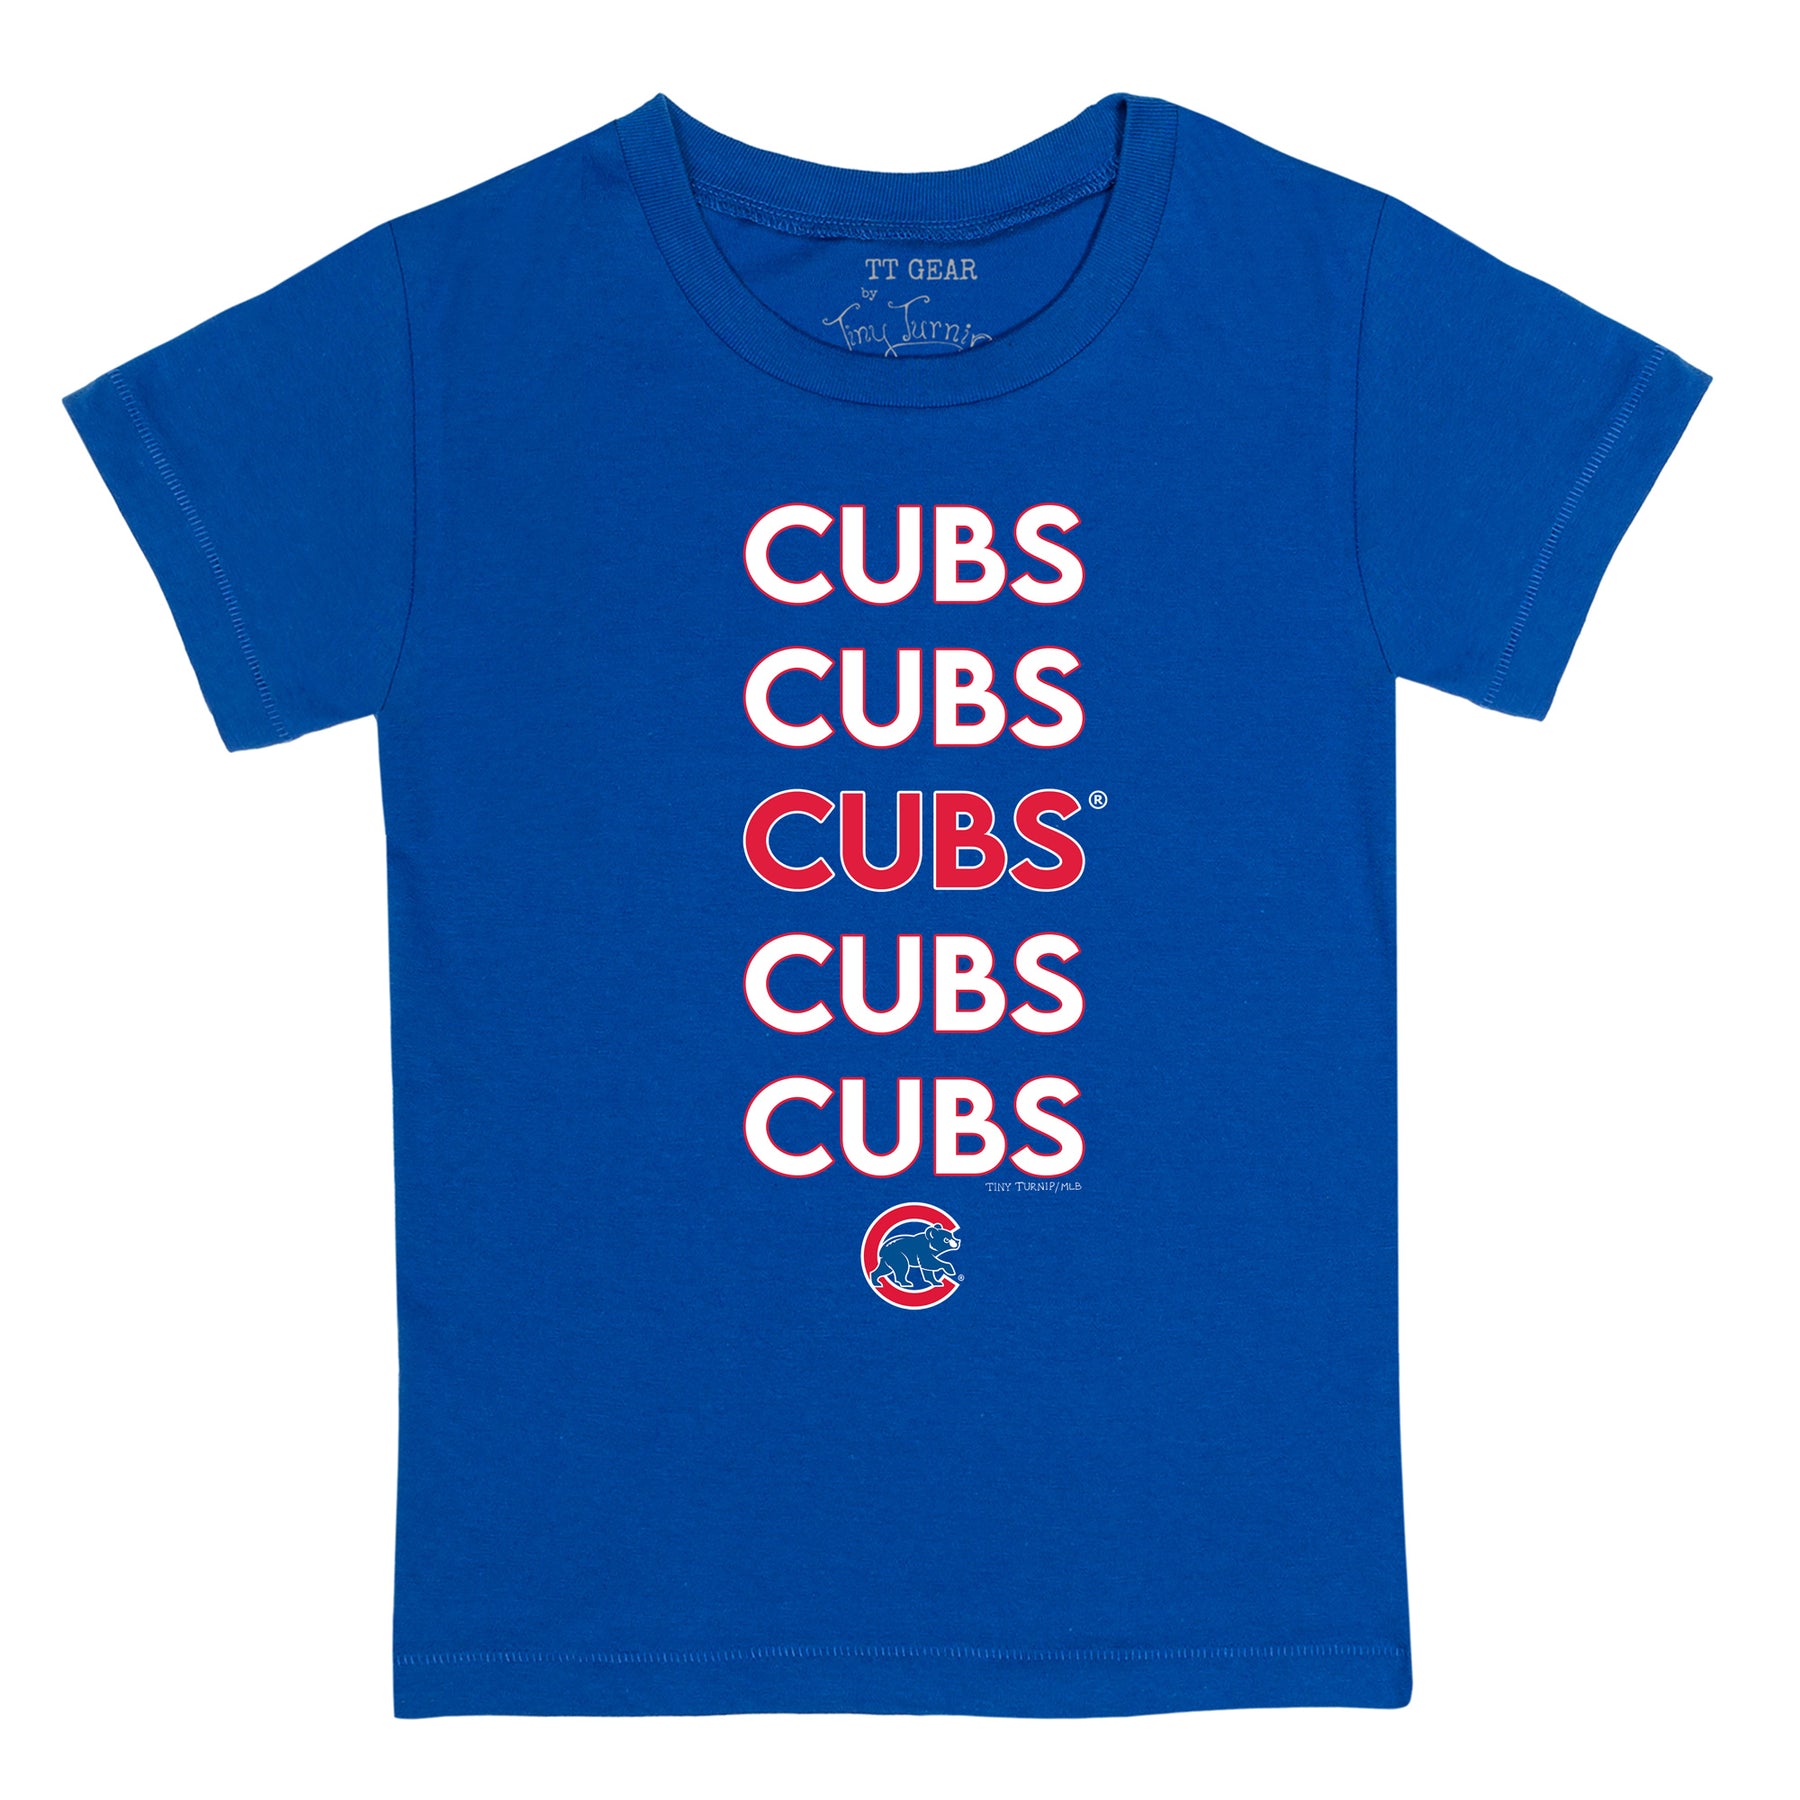 Chicago Cubs CHI baseball Bat Vintage Chicago Tri' Men's T-Shirt